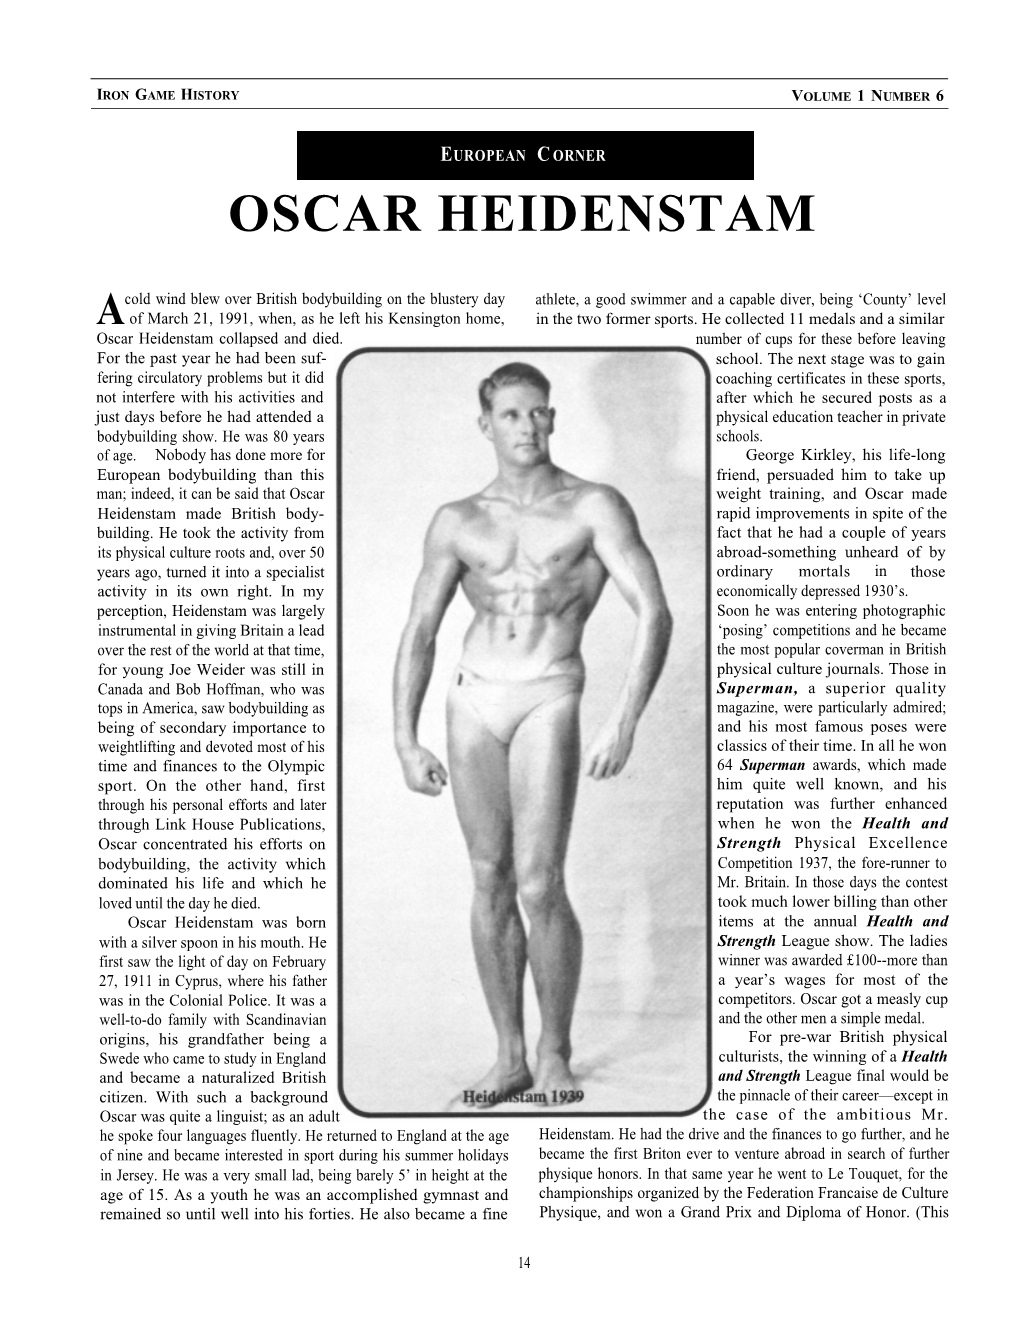 Oscar Heidenstam